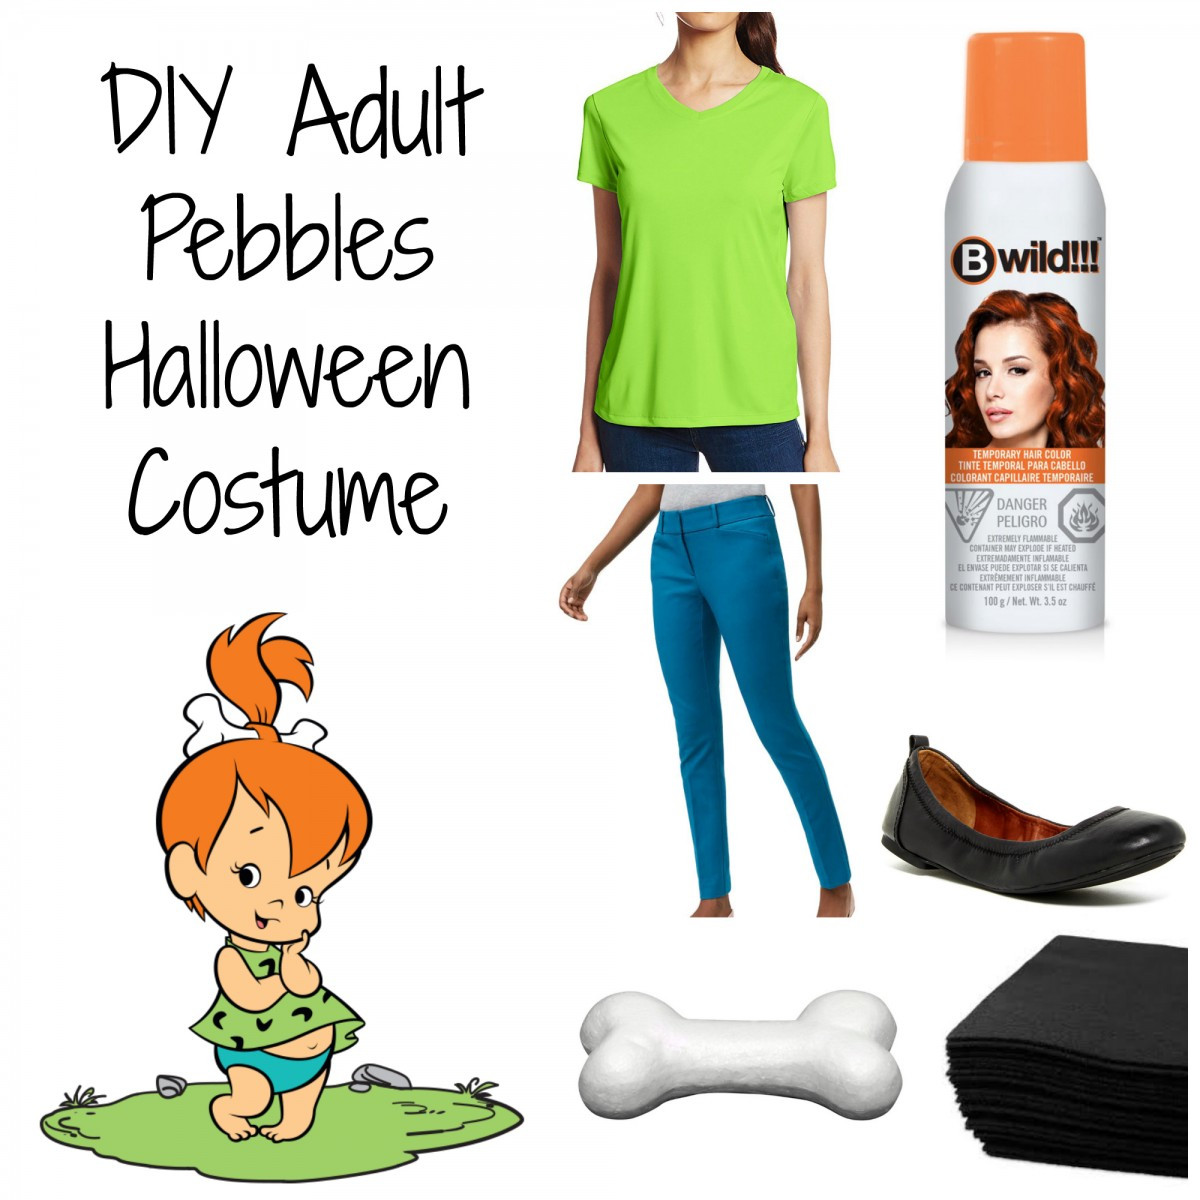 DIY Pebbles Costume
 DIY Adult Pebbles Halloween Costume Her Heartland Soul